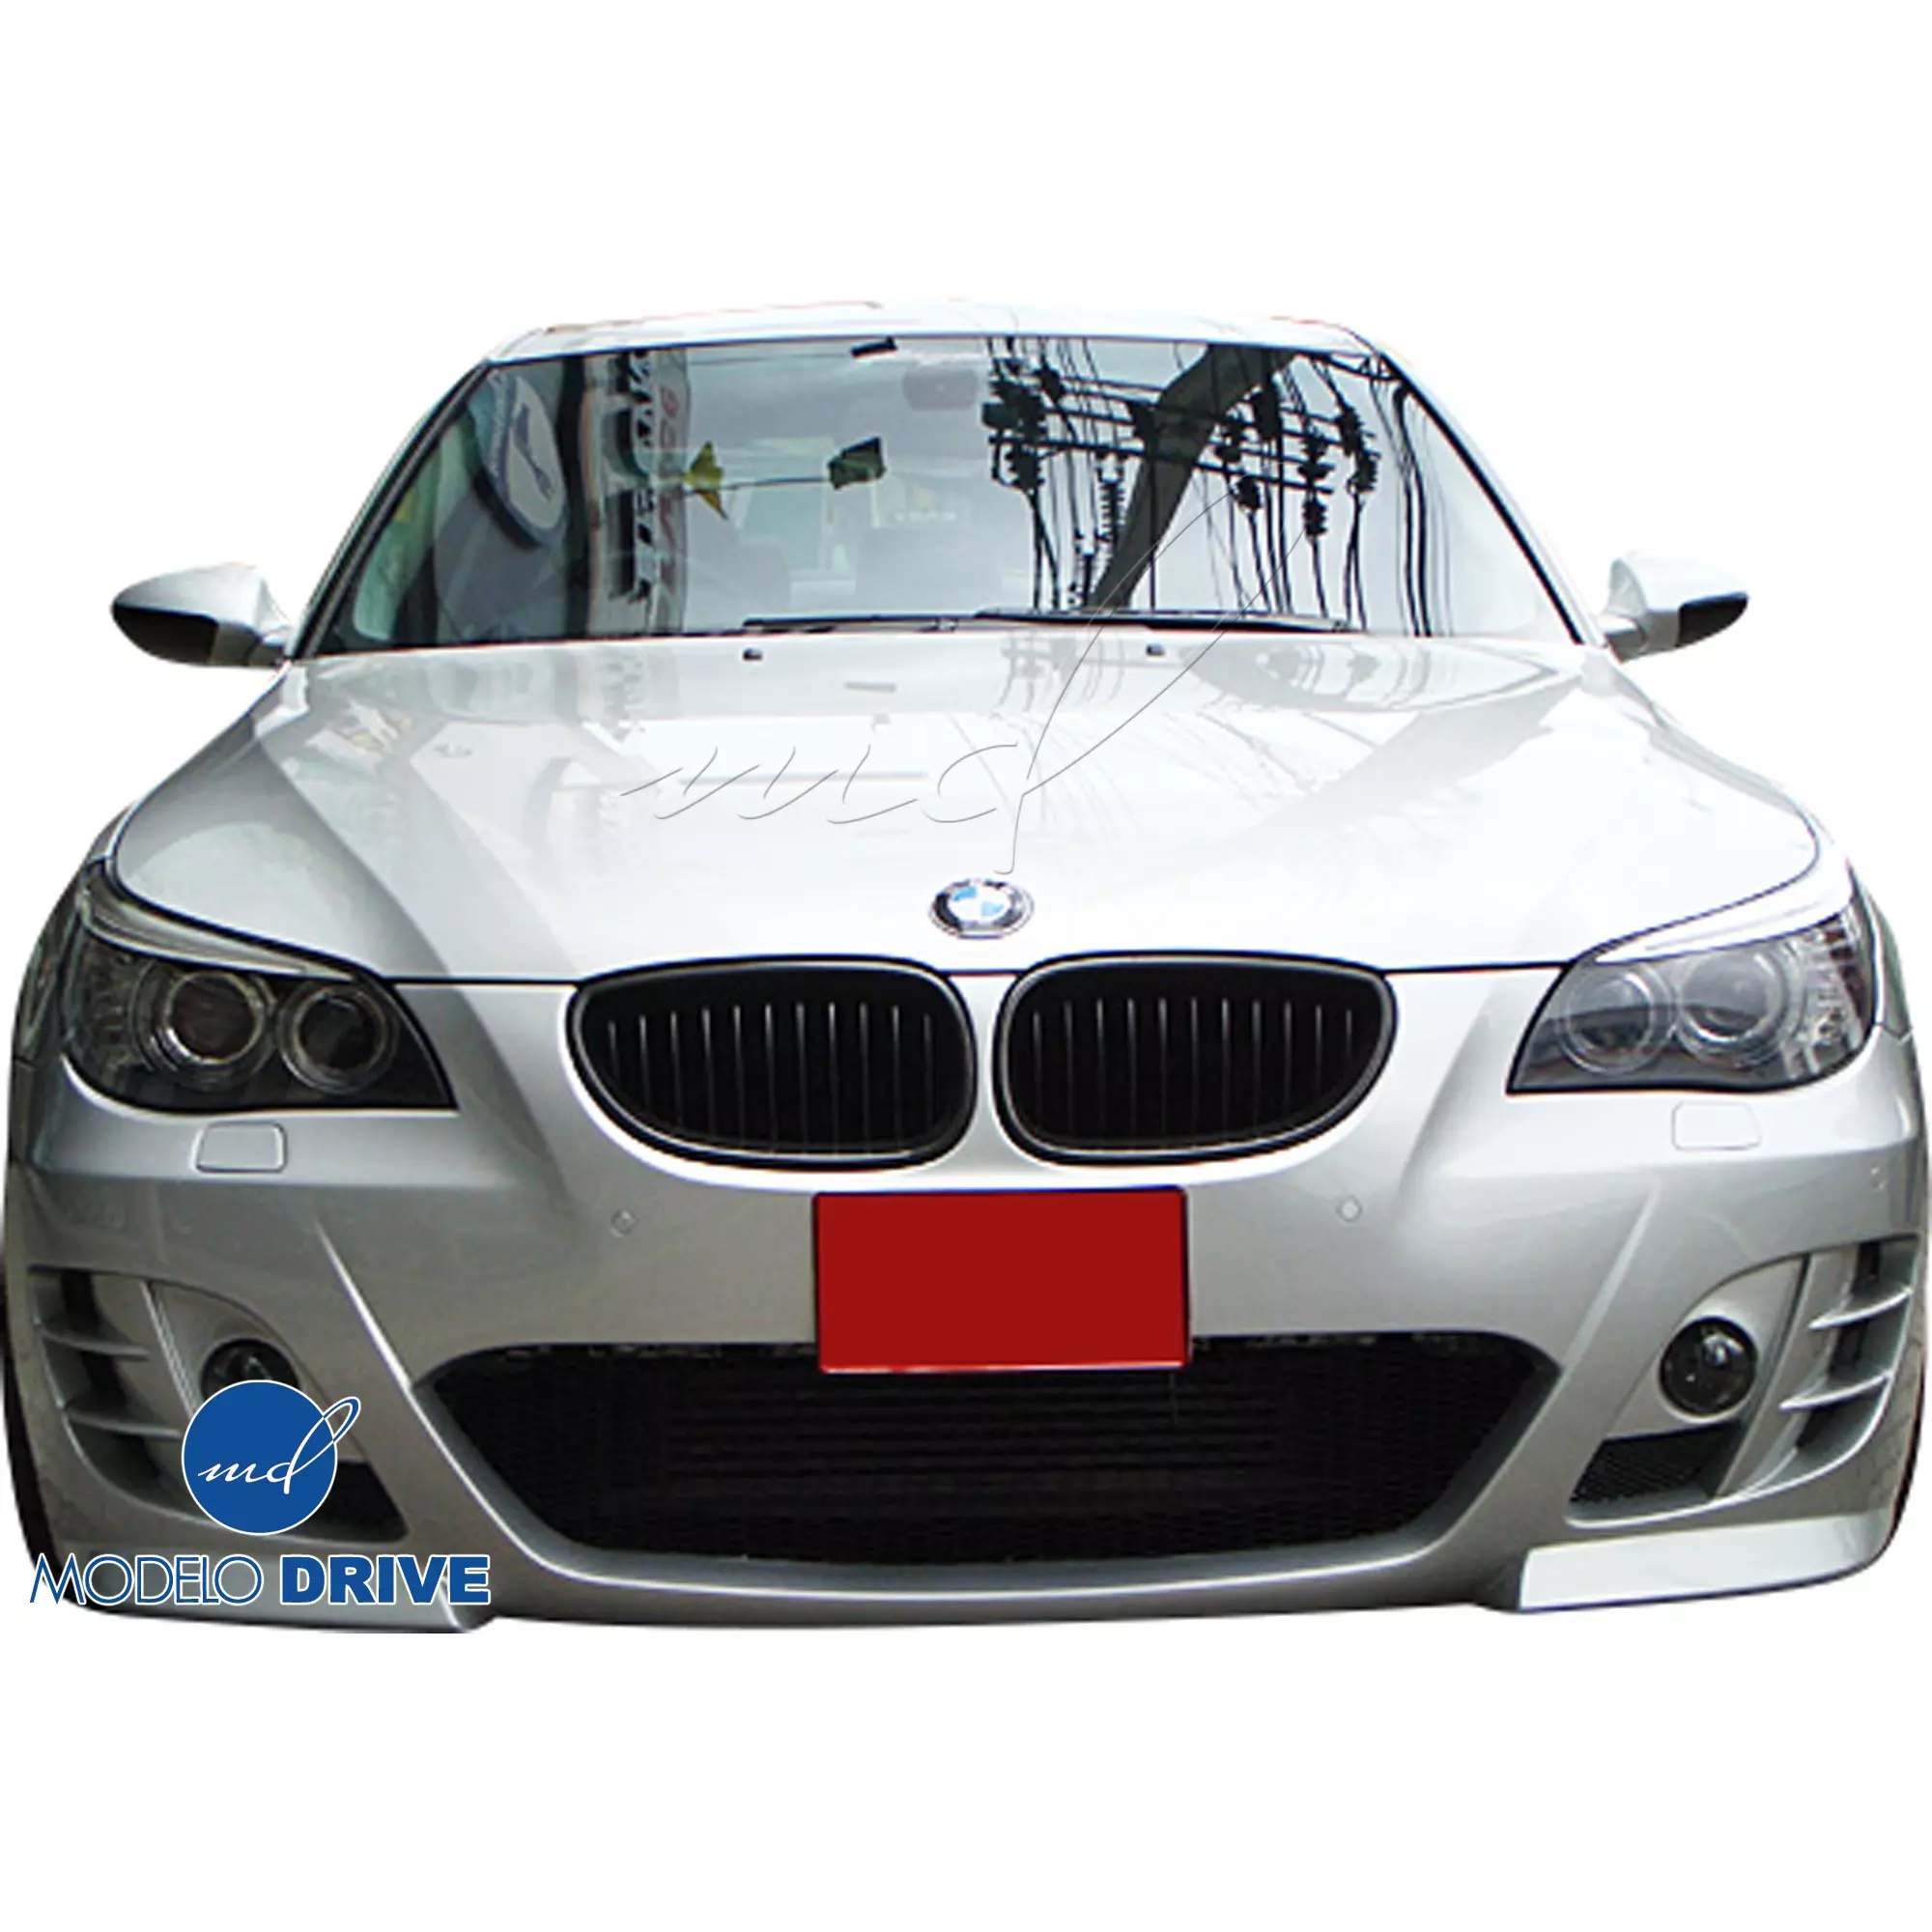 ModeloDrive FRP KERS Body Kit 4pc > BMW 3-Series E60 2004-2010 > 4dr - Image 3